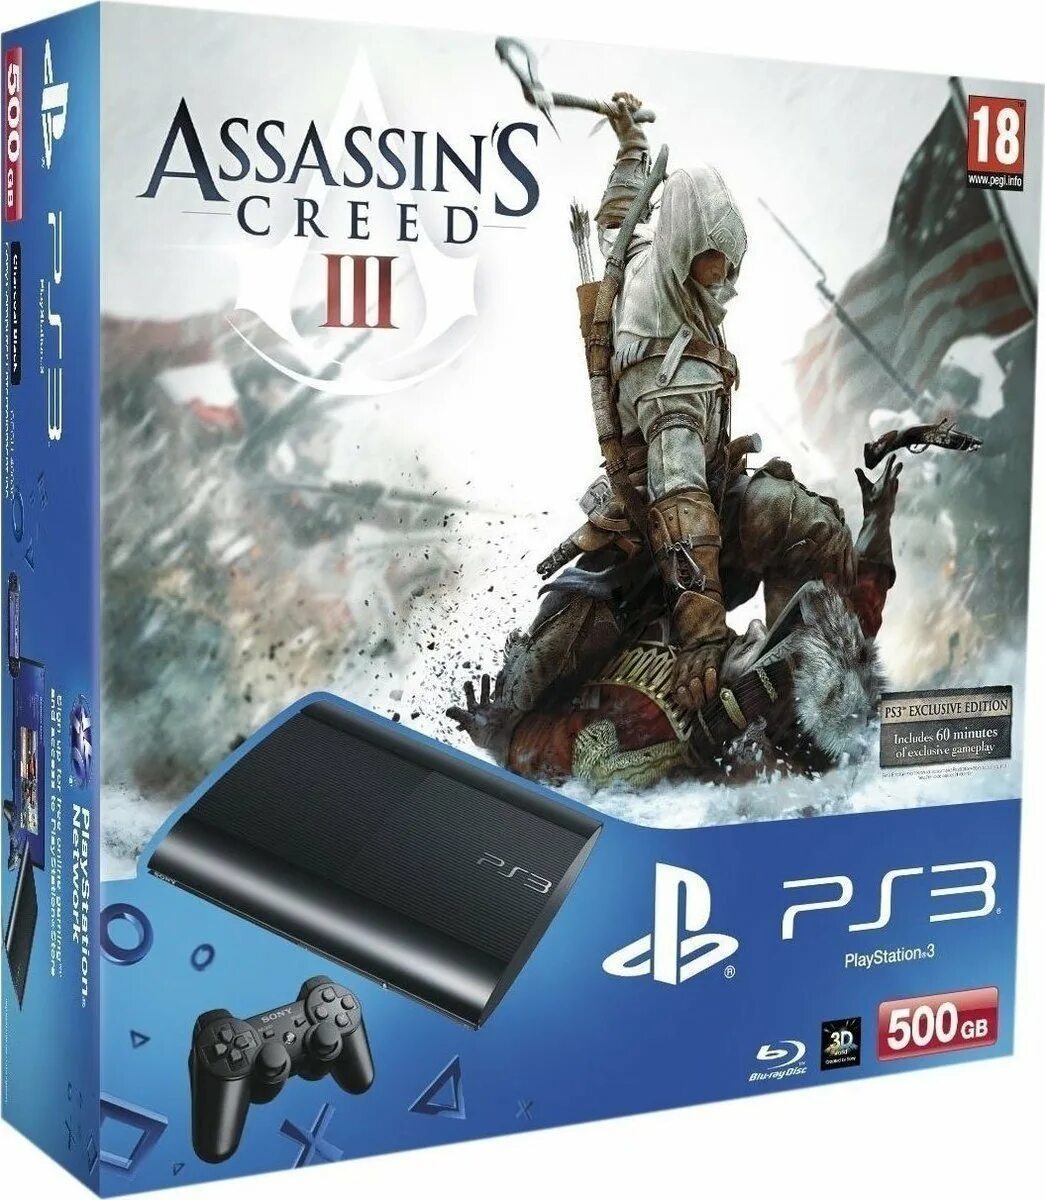 Игровая приставка Sony PLAYSTATION 3 super Slim 500 ГБ. Assassins Creed 1 ps3. Ассасин Крид на ПС 3. Sony PLAYSTATION 3 игры. Bles ps3